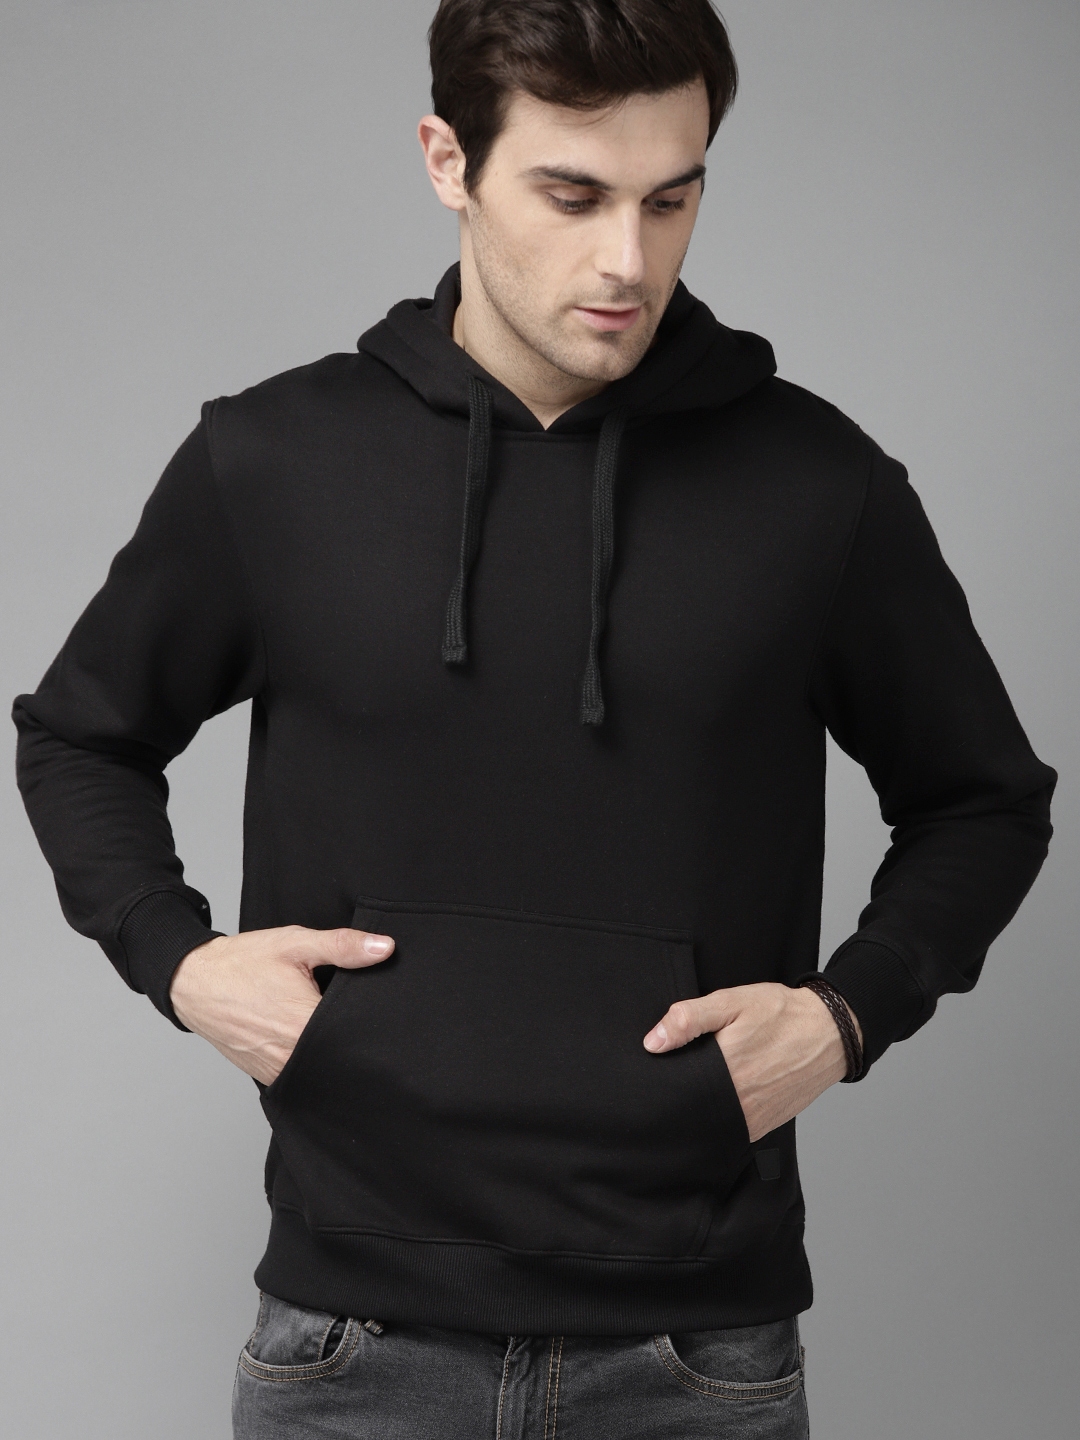 Buy The Roadster Lifestyle Co Men Black Solid Hooded Sweatshirt ...